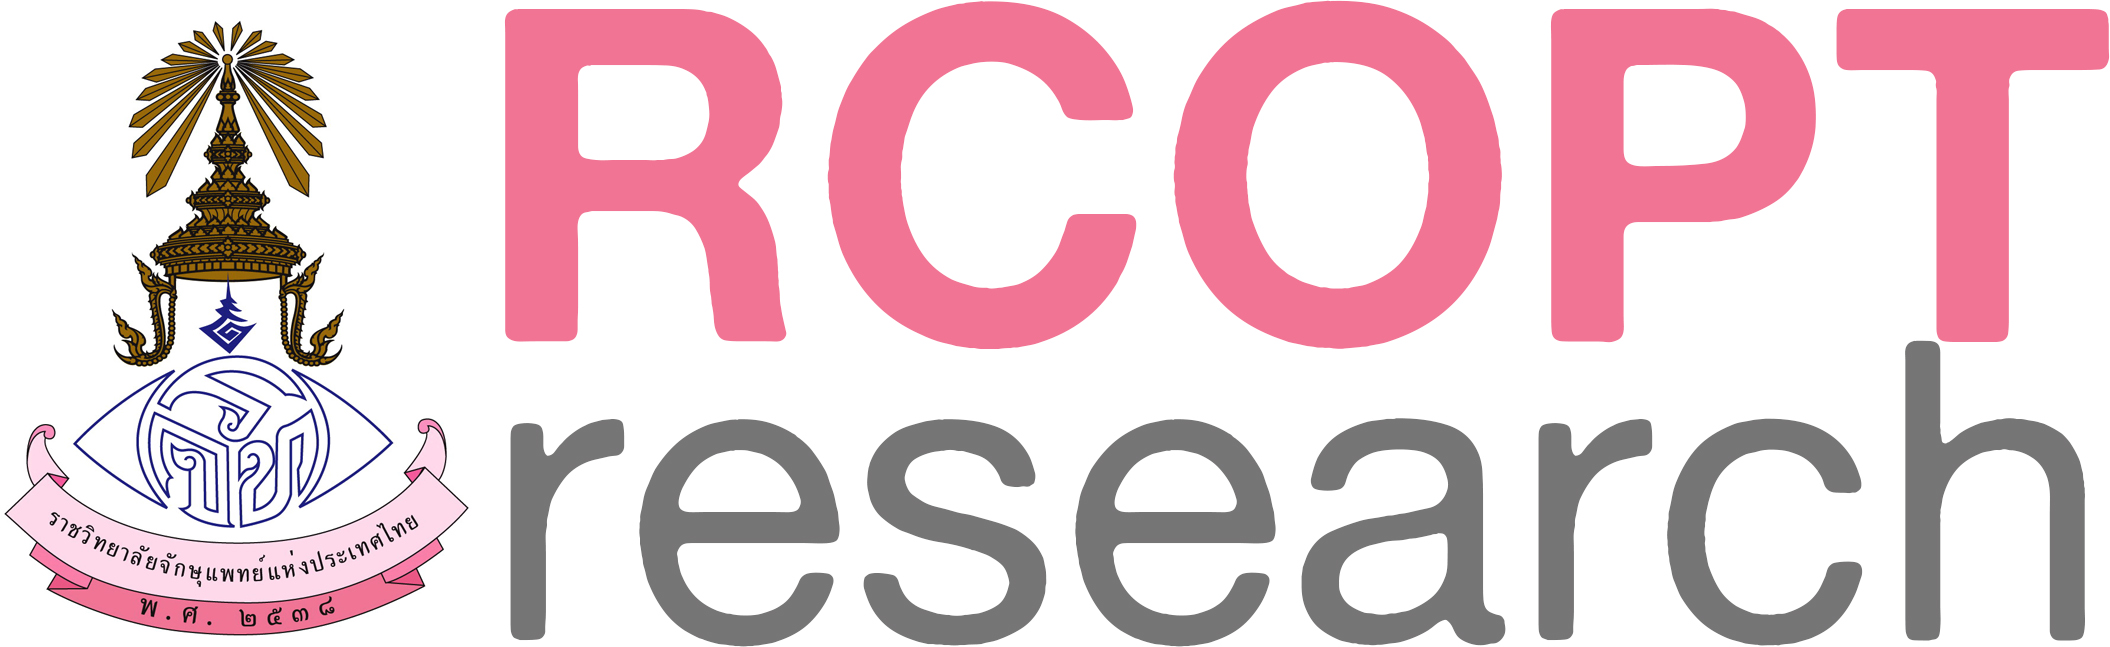 2117RCOPT research logo1.jpg